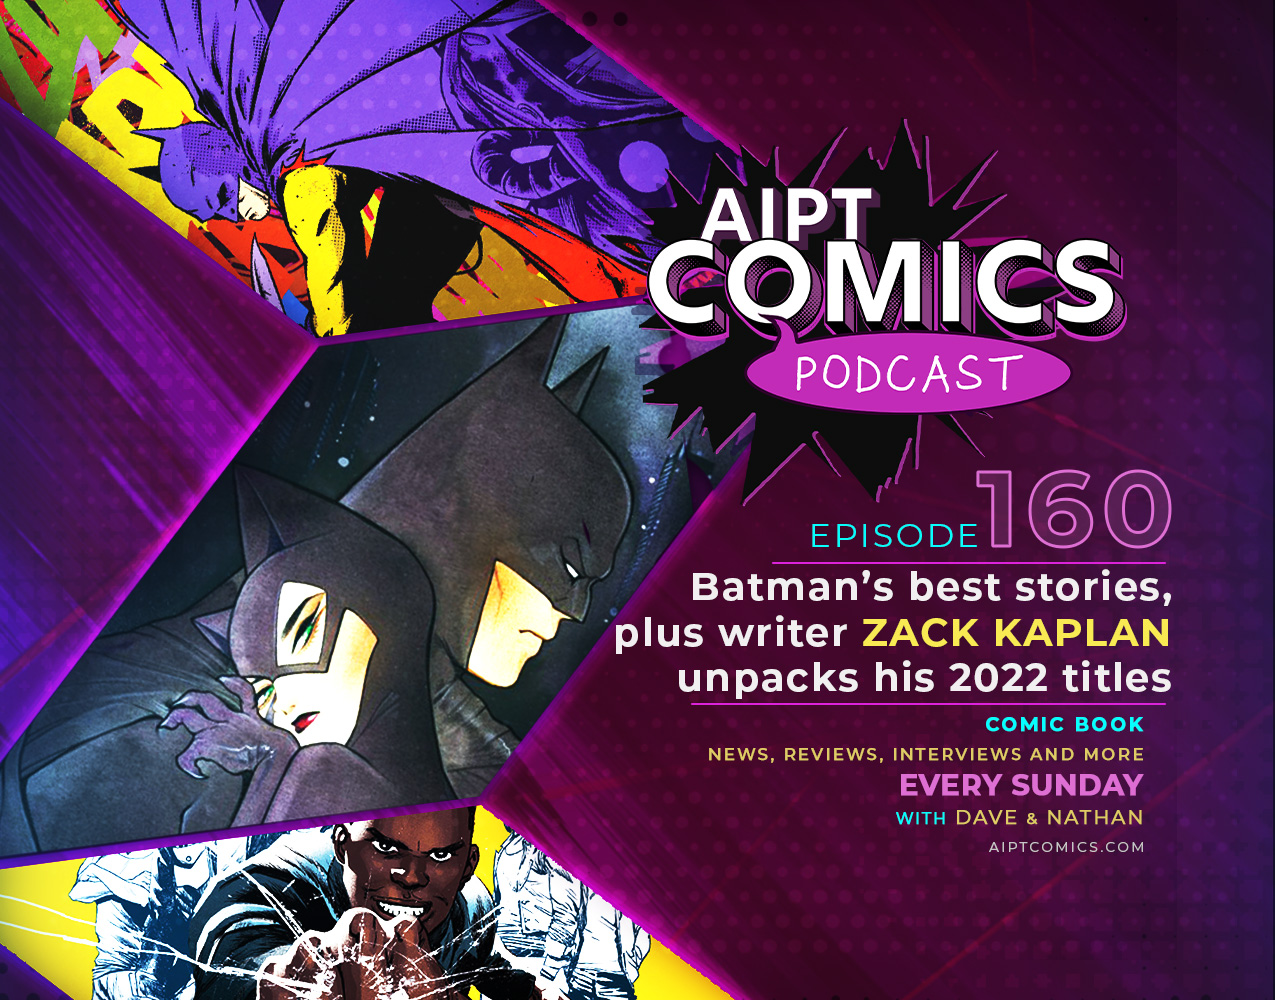 AIPT Comics podcast episode 160: Batman's best stories, plus writer Zack Kaplan unpacks 2022 titles